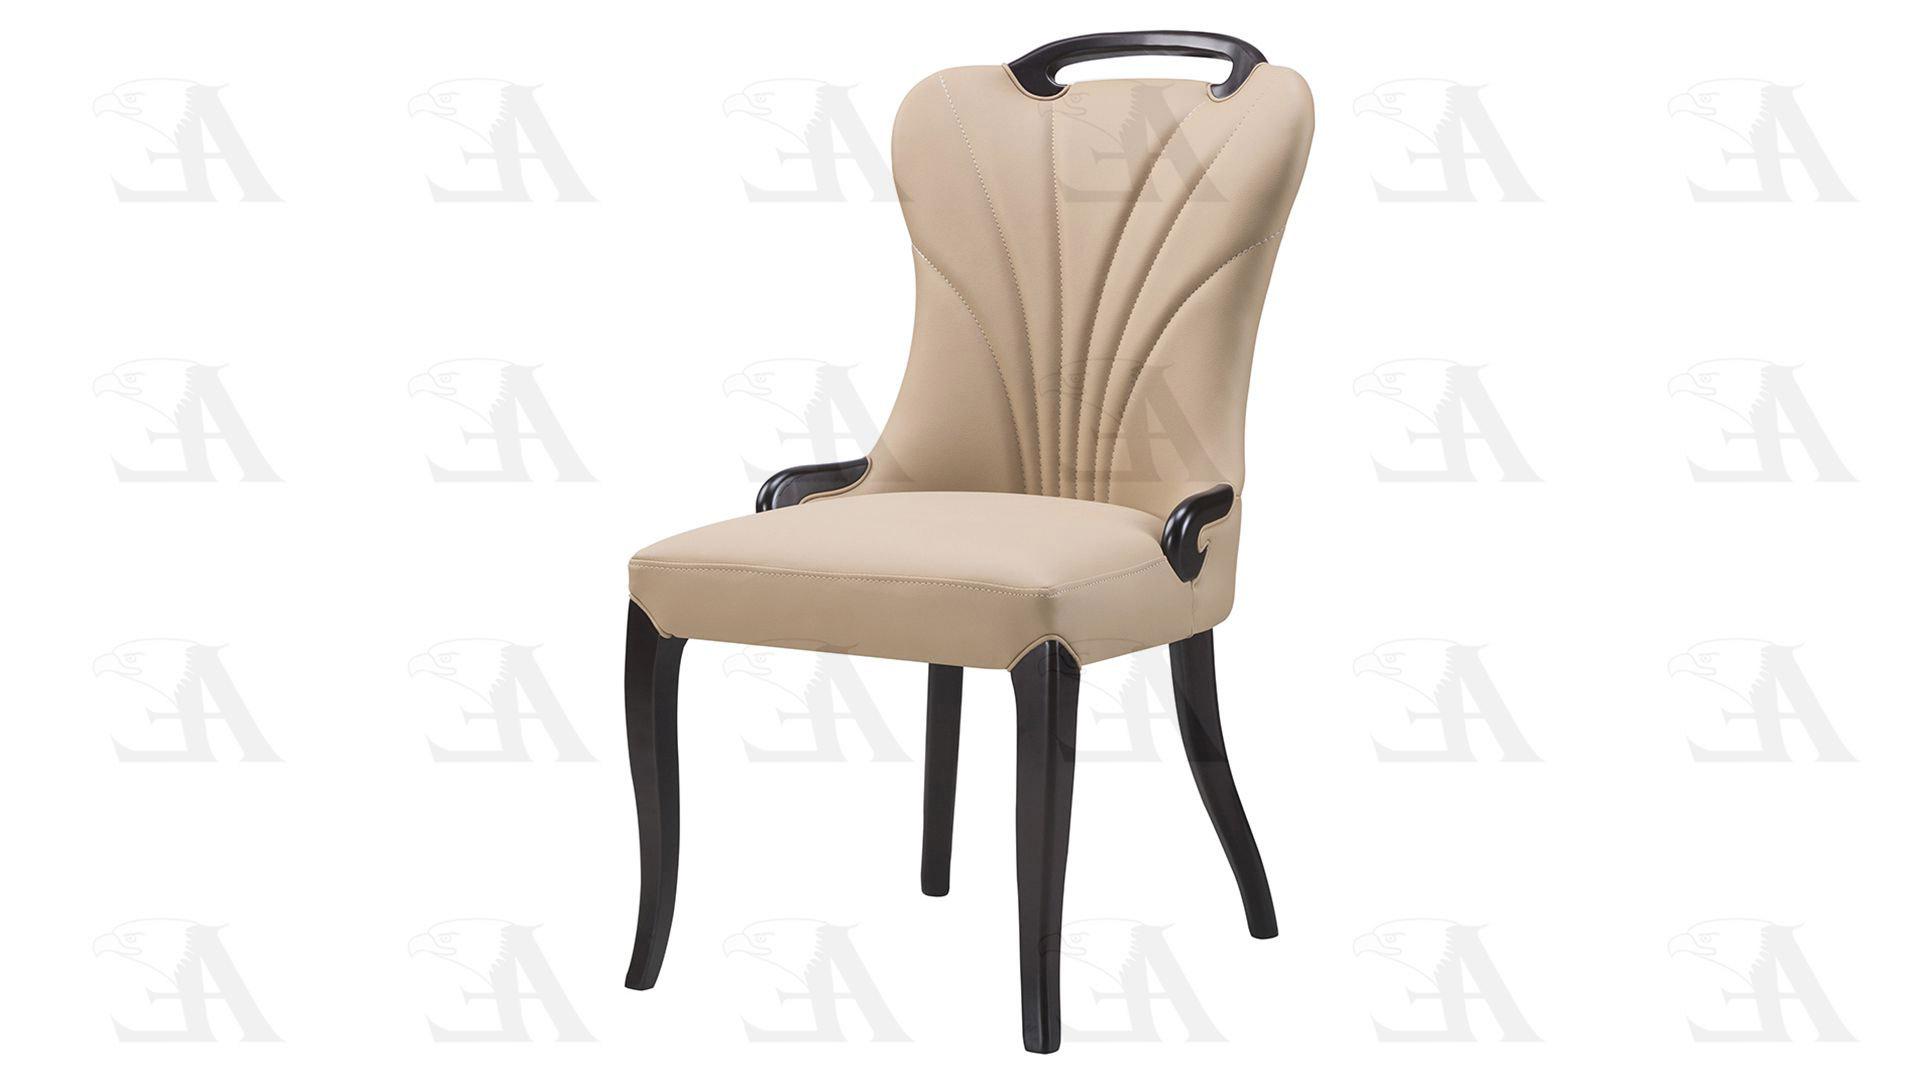 

    
American Eagle Furniture CK-H604-TAN PU Dining Chair
